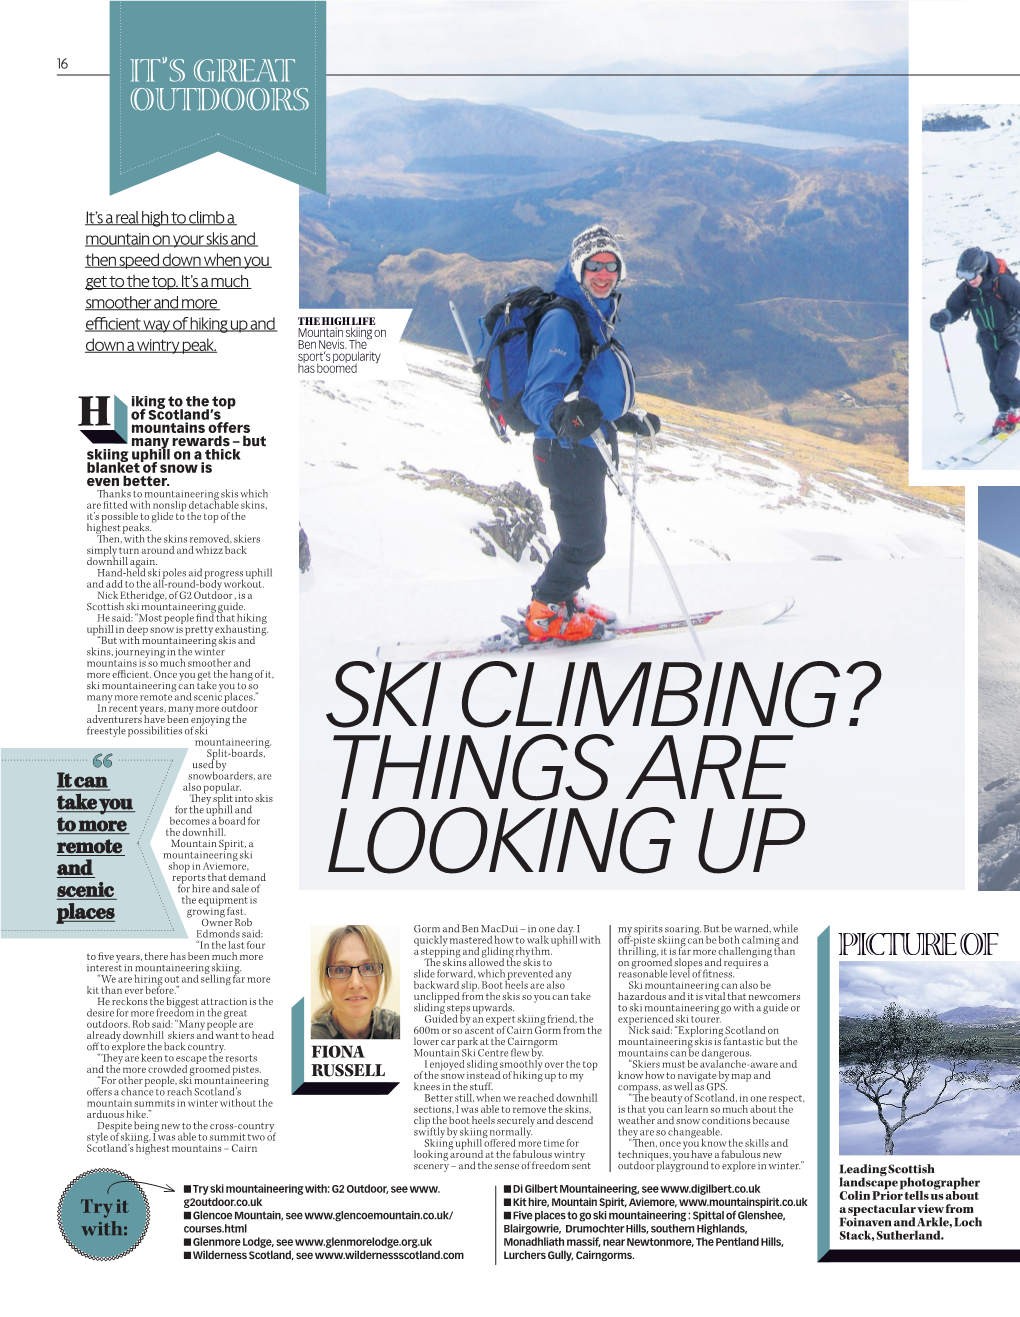 SKI CLIMBING? Mountaineering